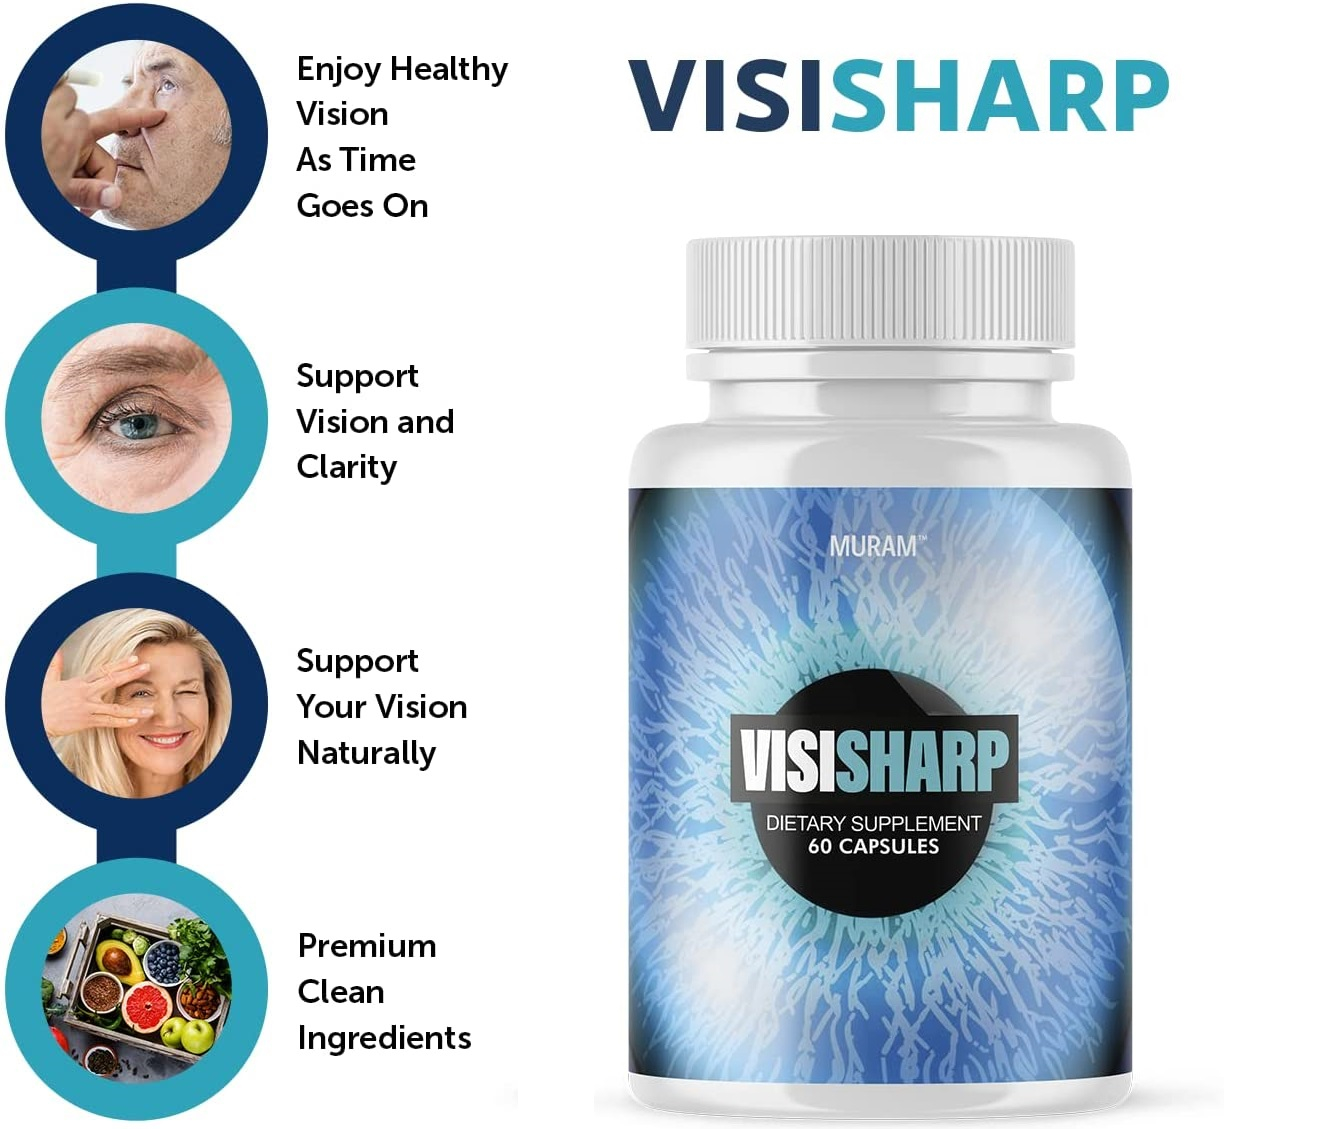 VisiSharp Reviews and Complaints